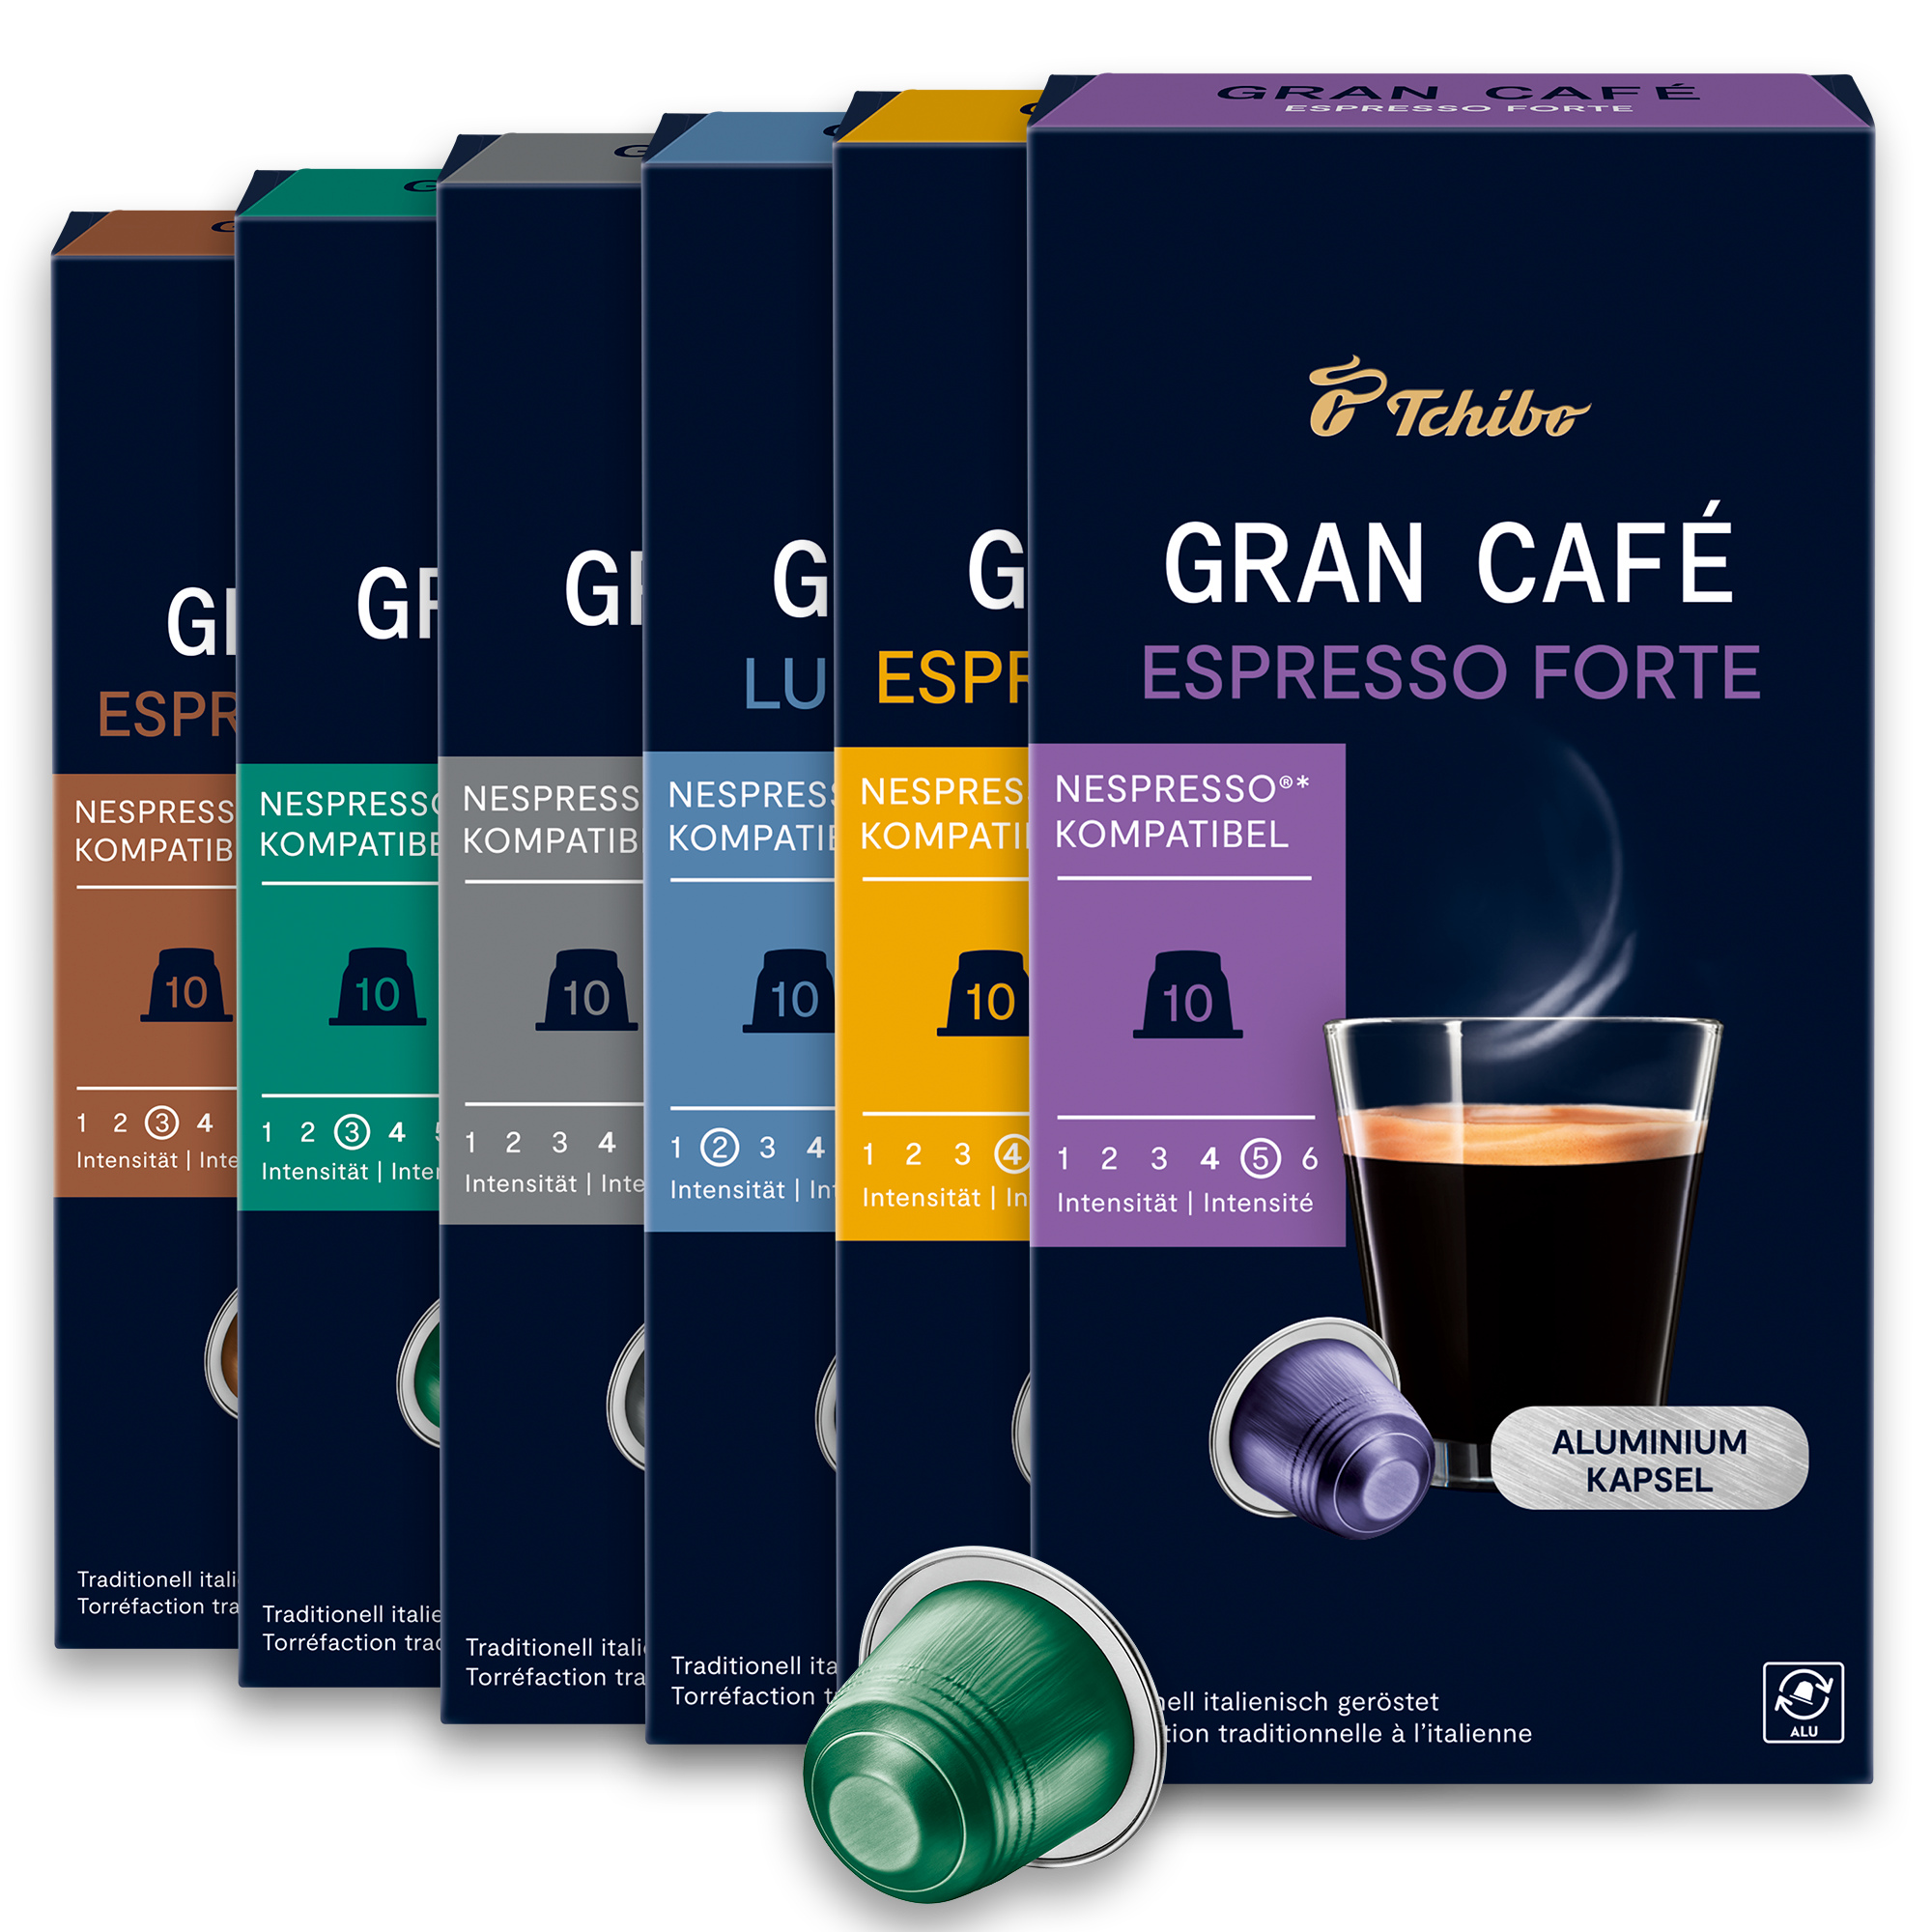 Gran Café Espresso Classico - Balanced espresso with hints of